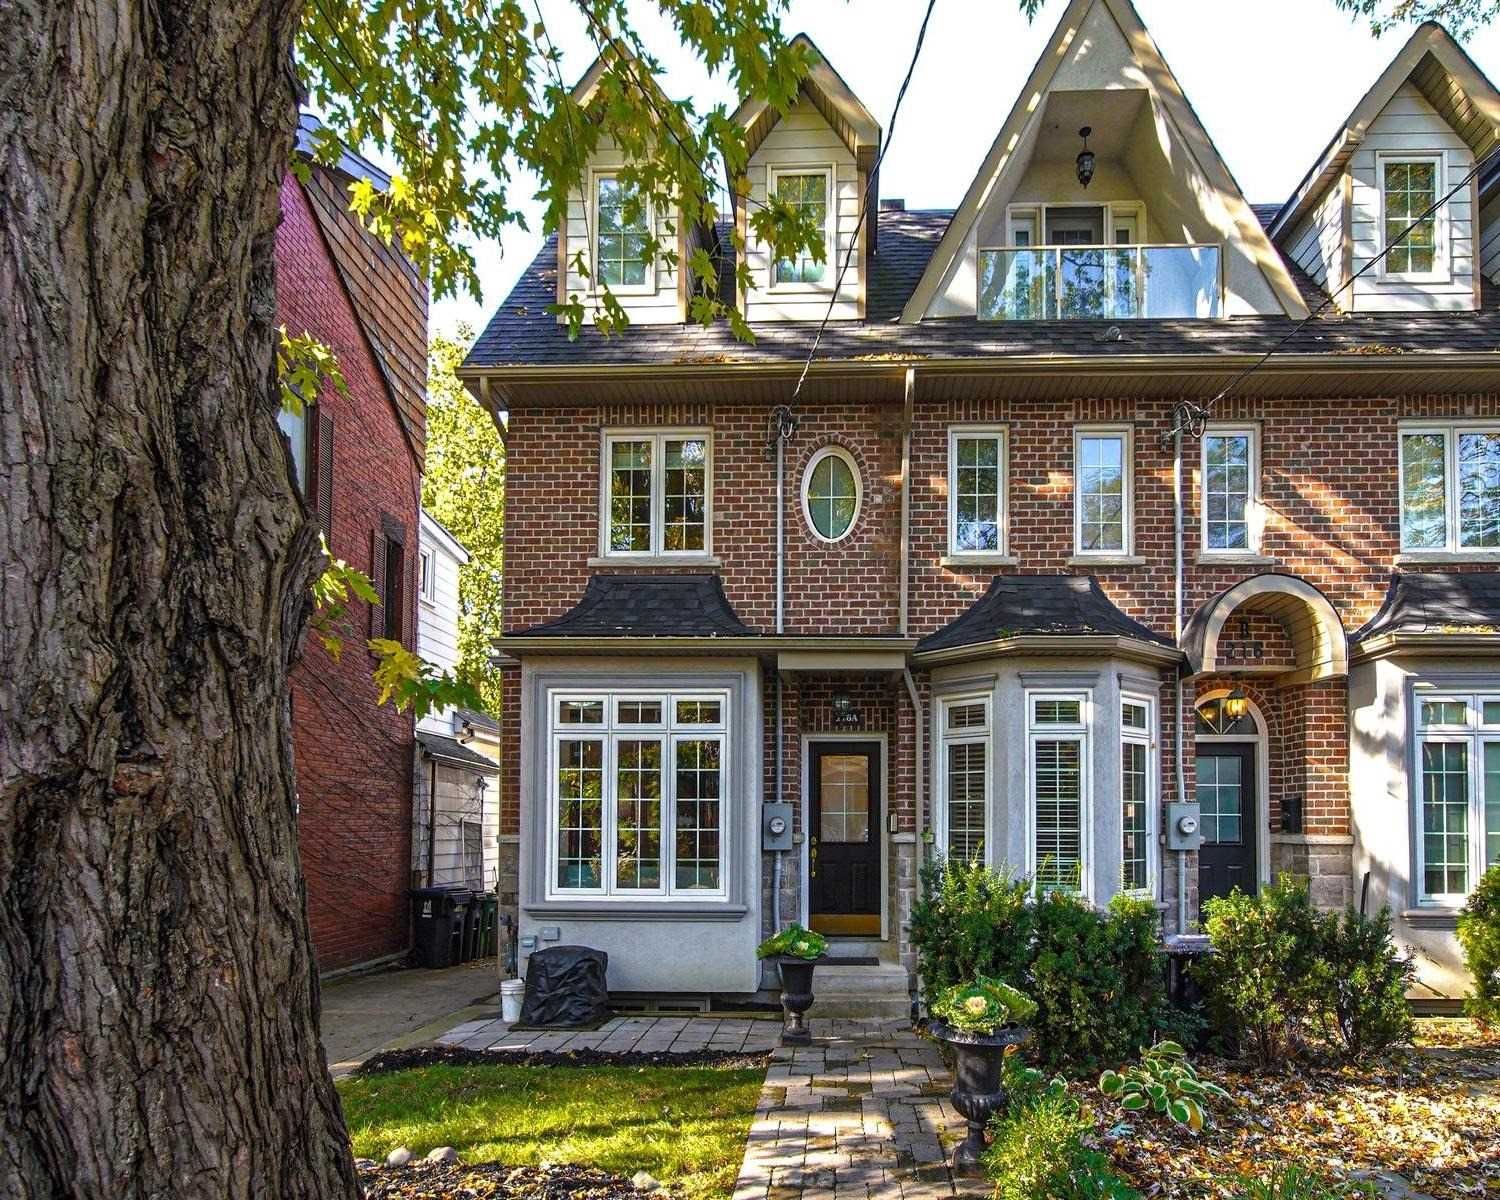 Main Photo: 216A Hamilton Street in Toronto: South Riverdale House (3-Storey) for sale (Toronto E01)  : MLS®# E4619870